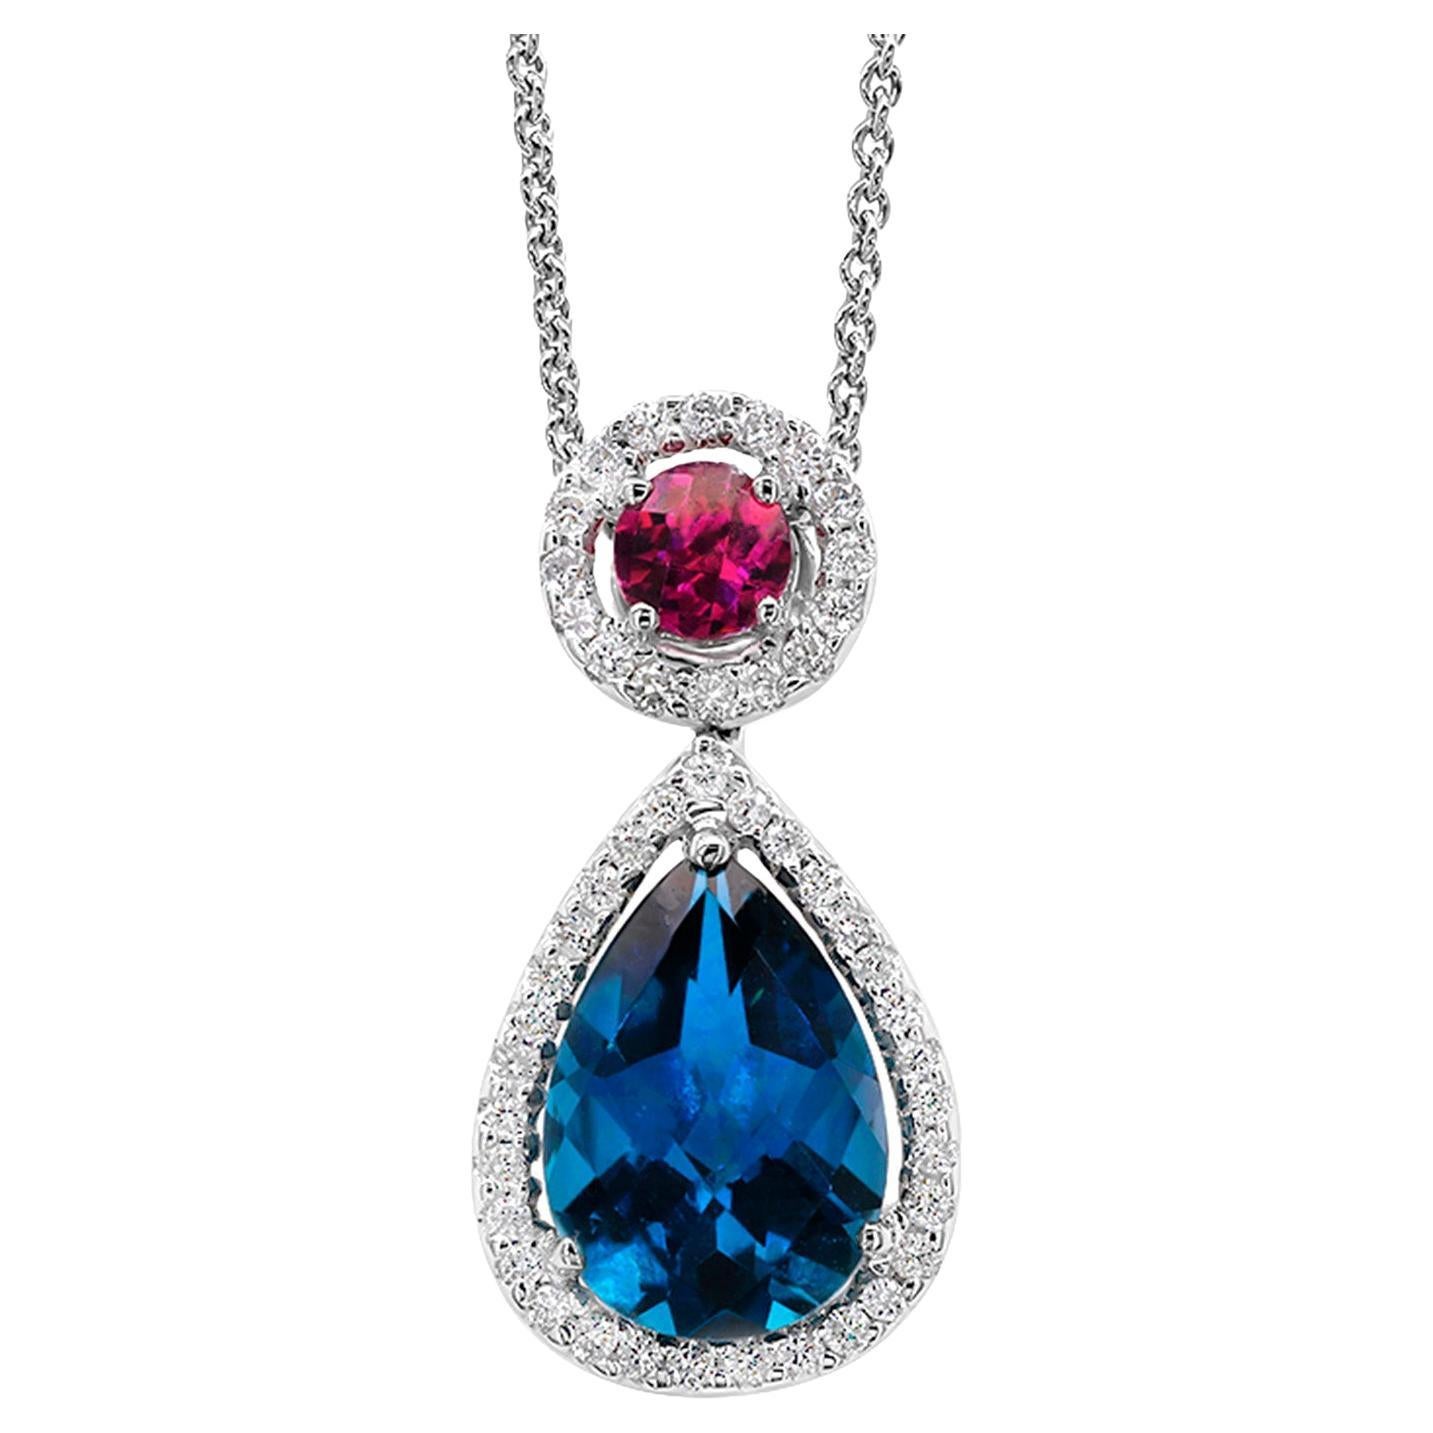 Collier pendentif London Blue Topaz Rhodolite Diamonds 2,9 carats or blanc 18 carats